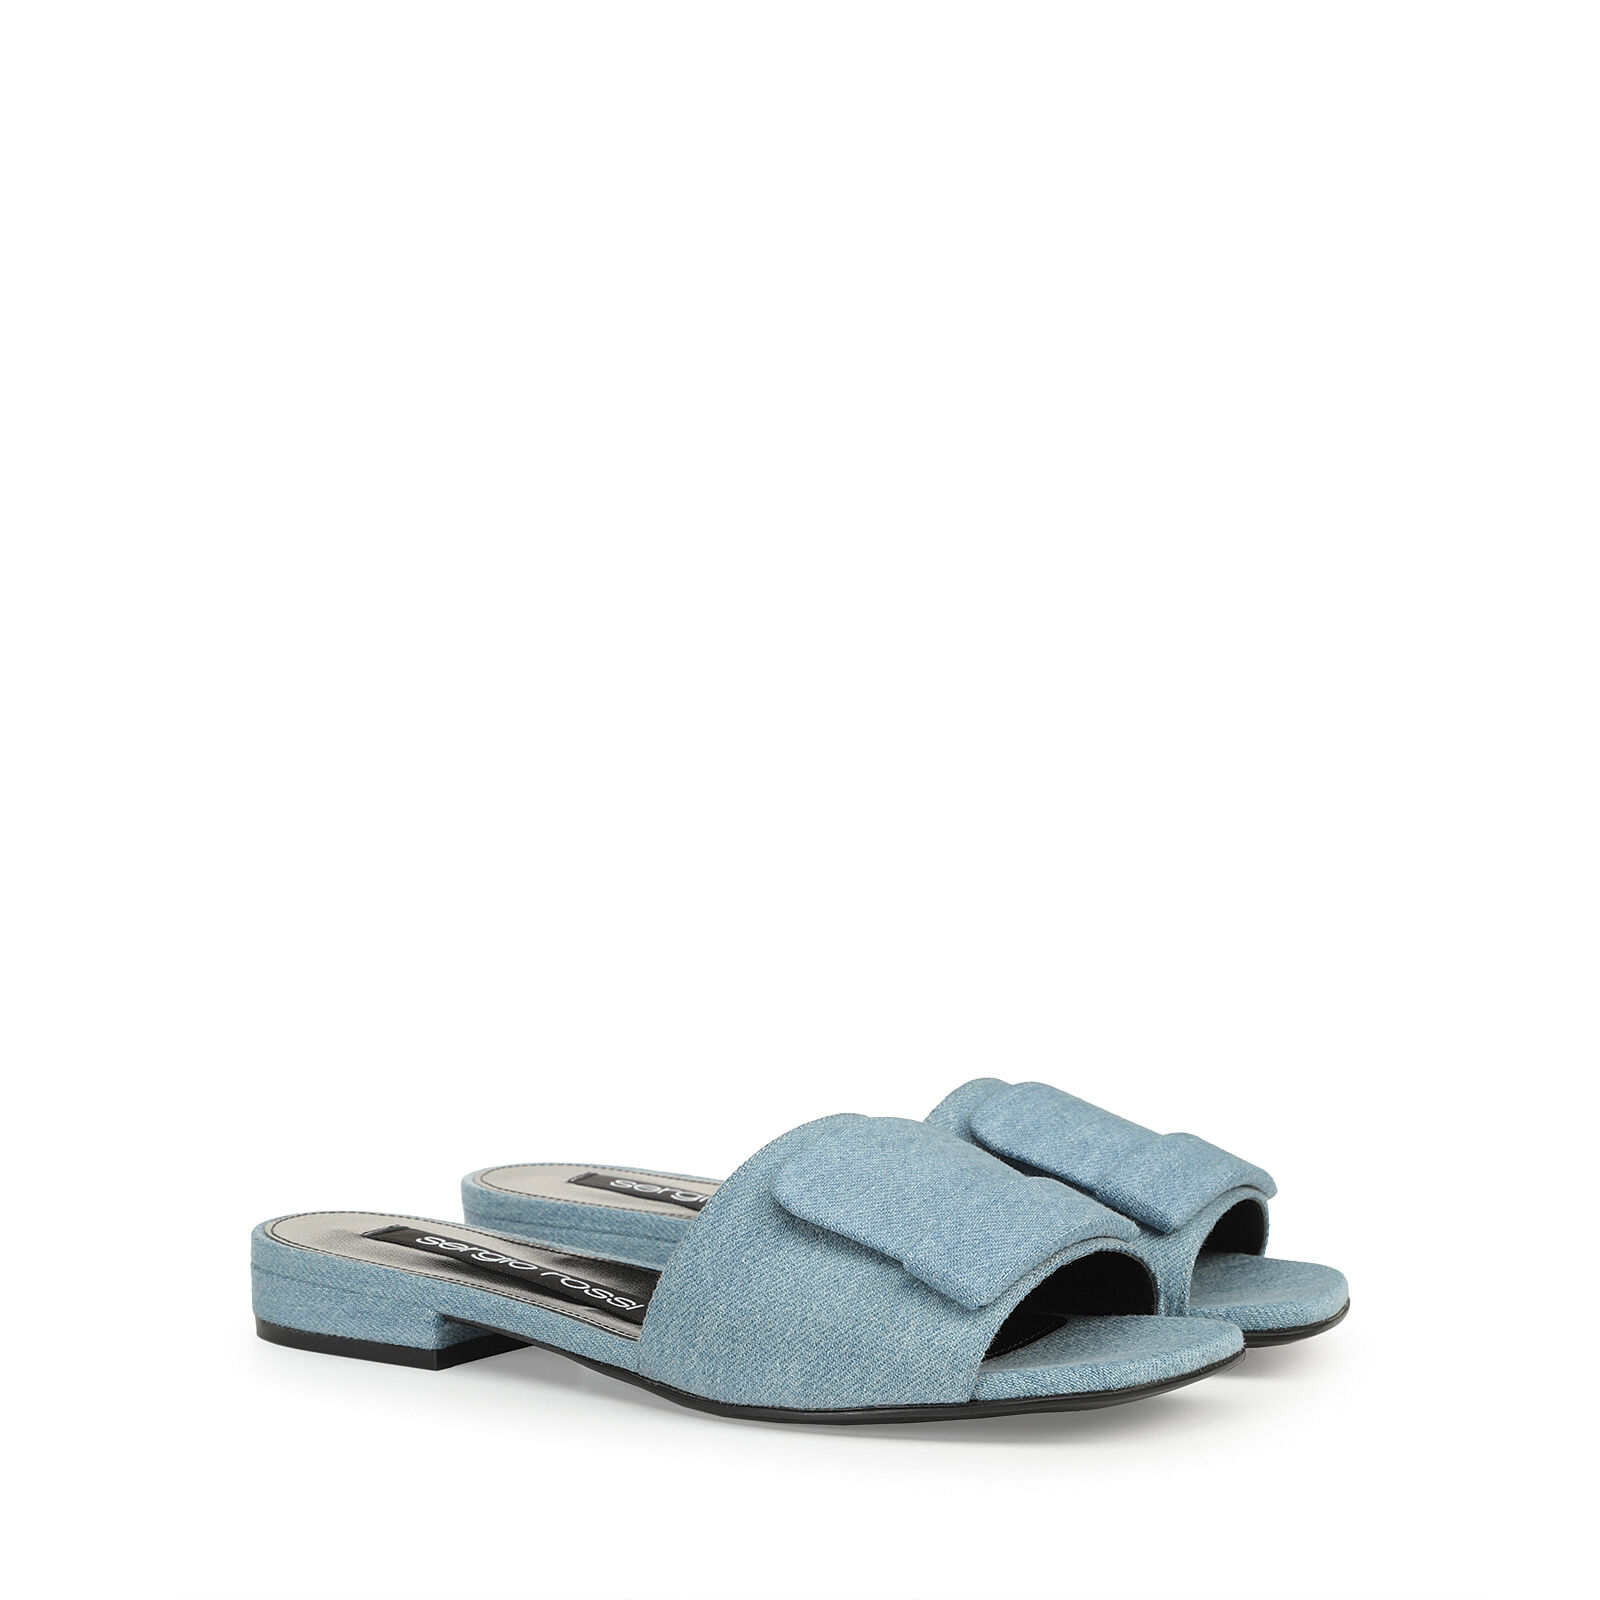 sr1 - Sandals Blue, 1